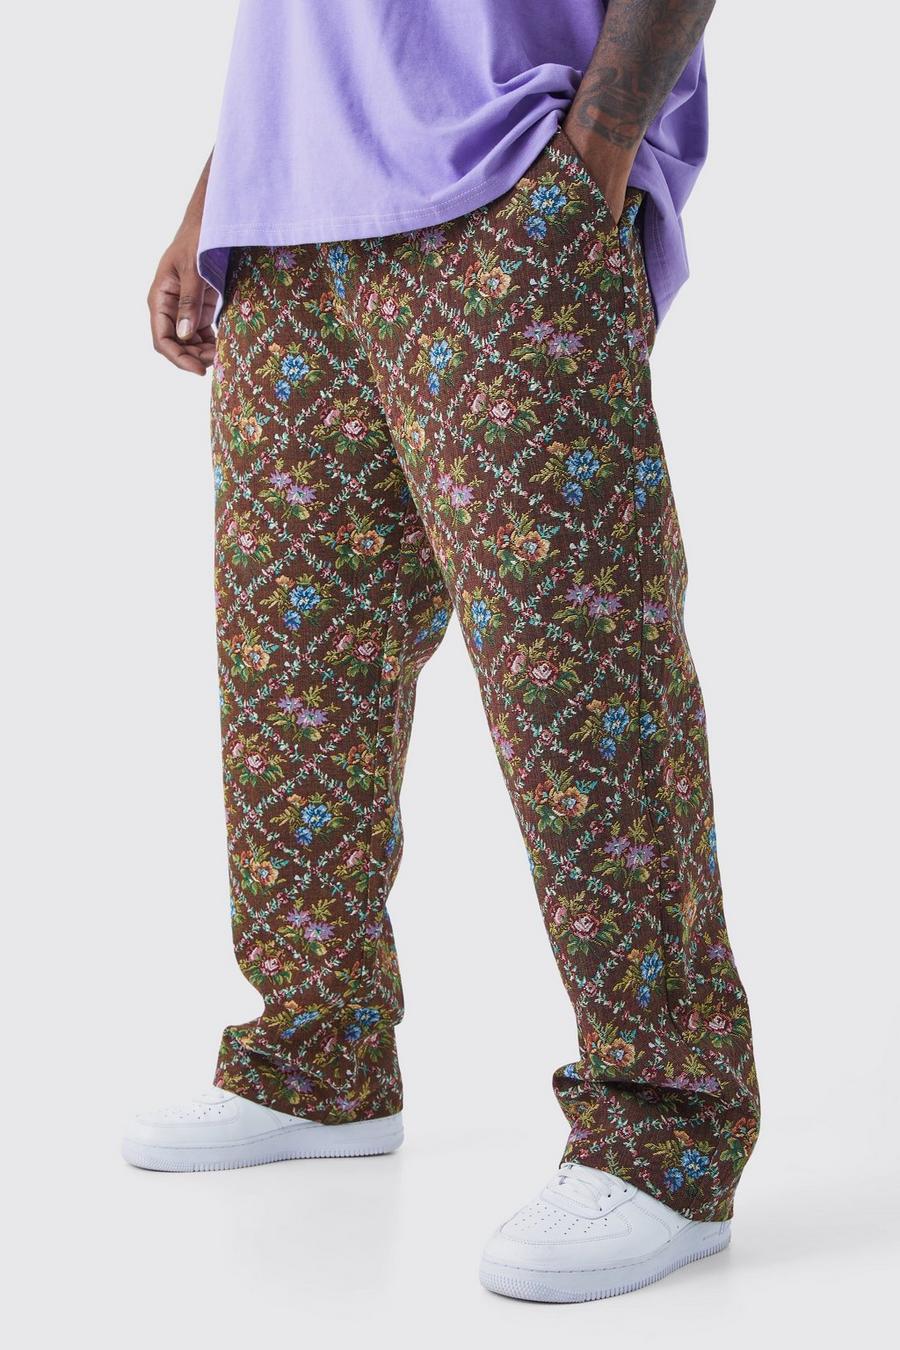 Grande taille - Pantalon à taille fixe et motif tapisserie fleurie, Chocolate